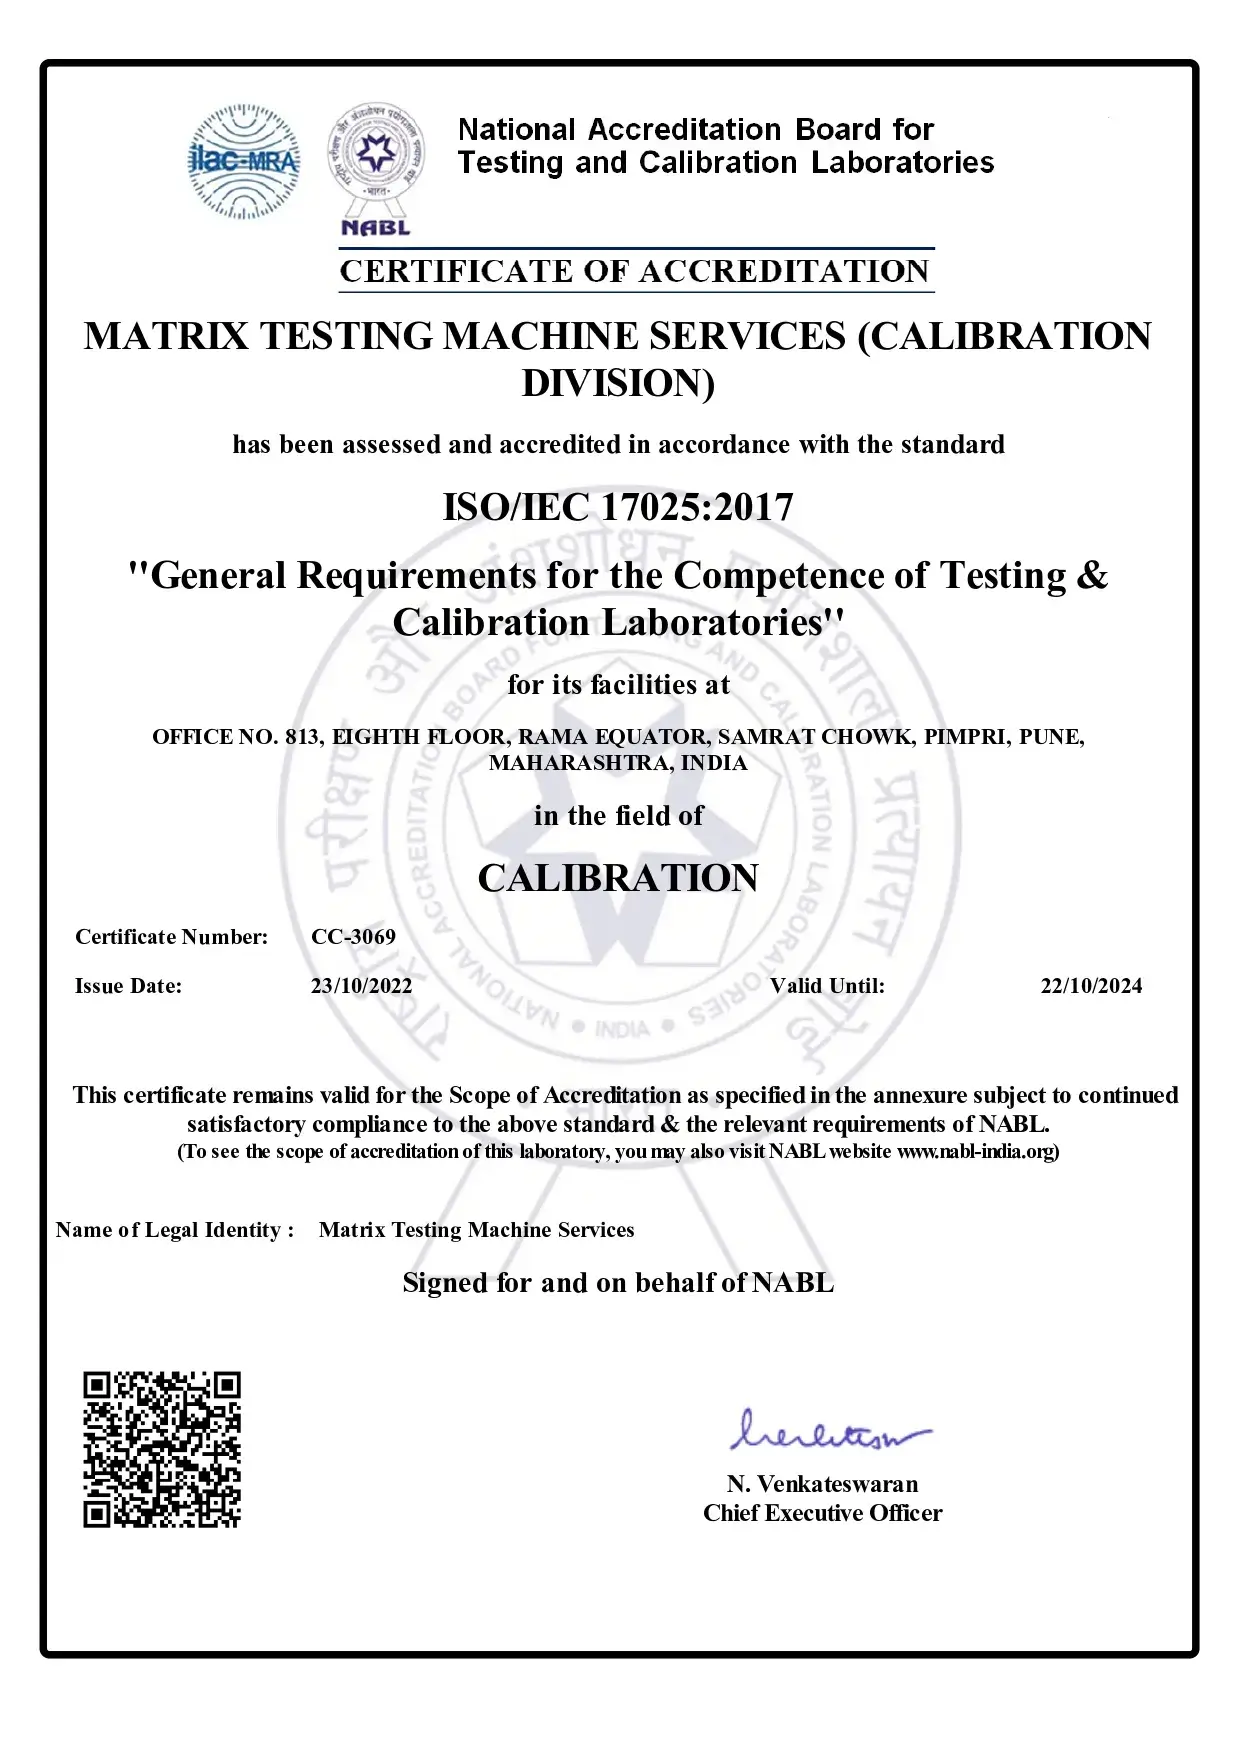 Certificates Matrix Testing And Technologies 